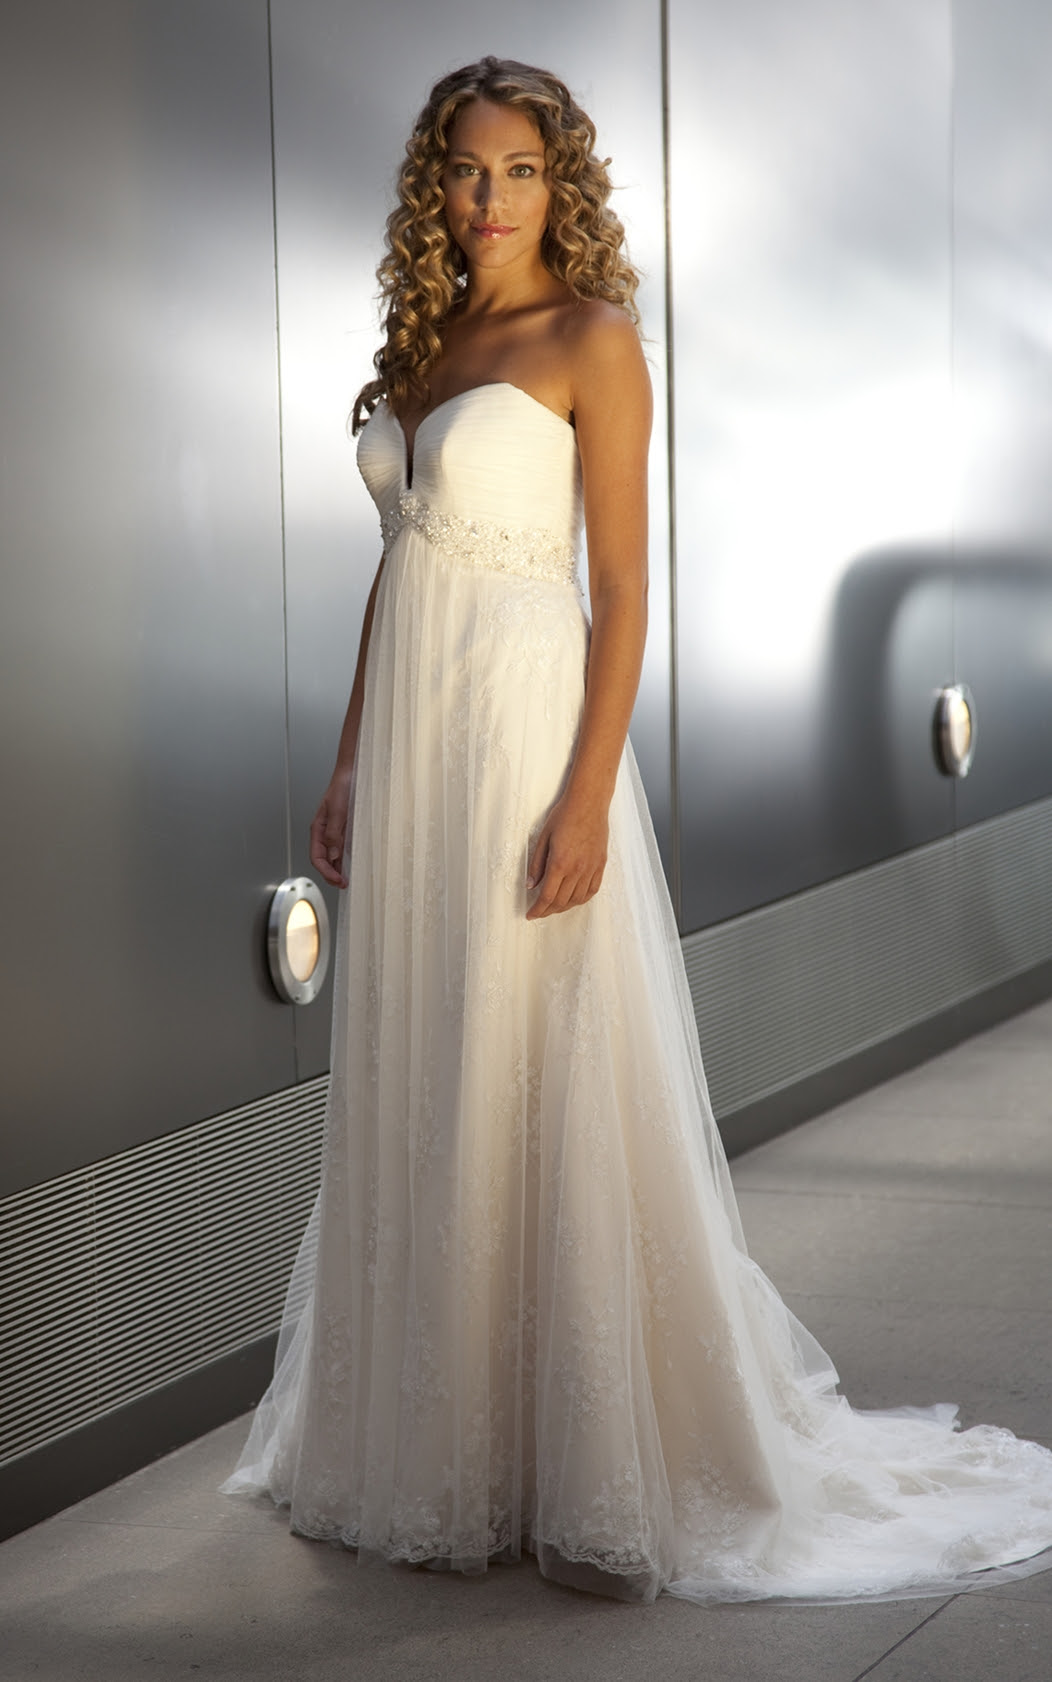  Bridal  Extravaganza Atlanta  Show to Reveal Latest Designs 